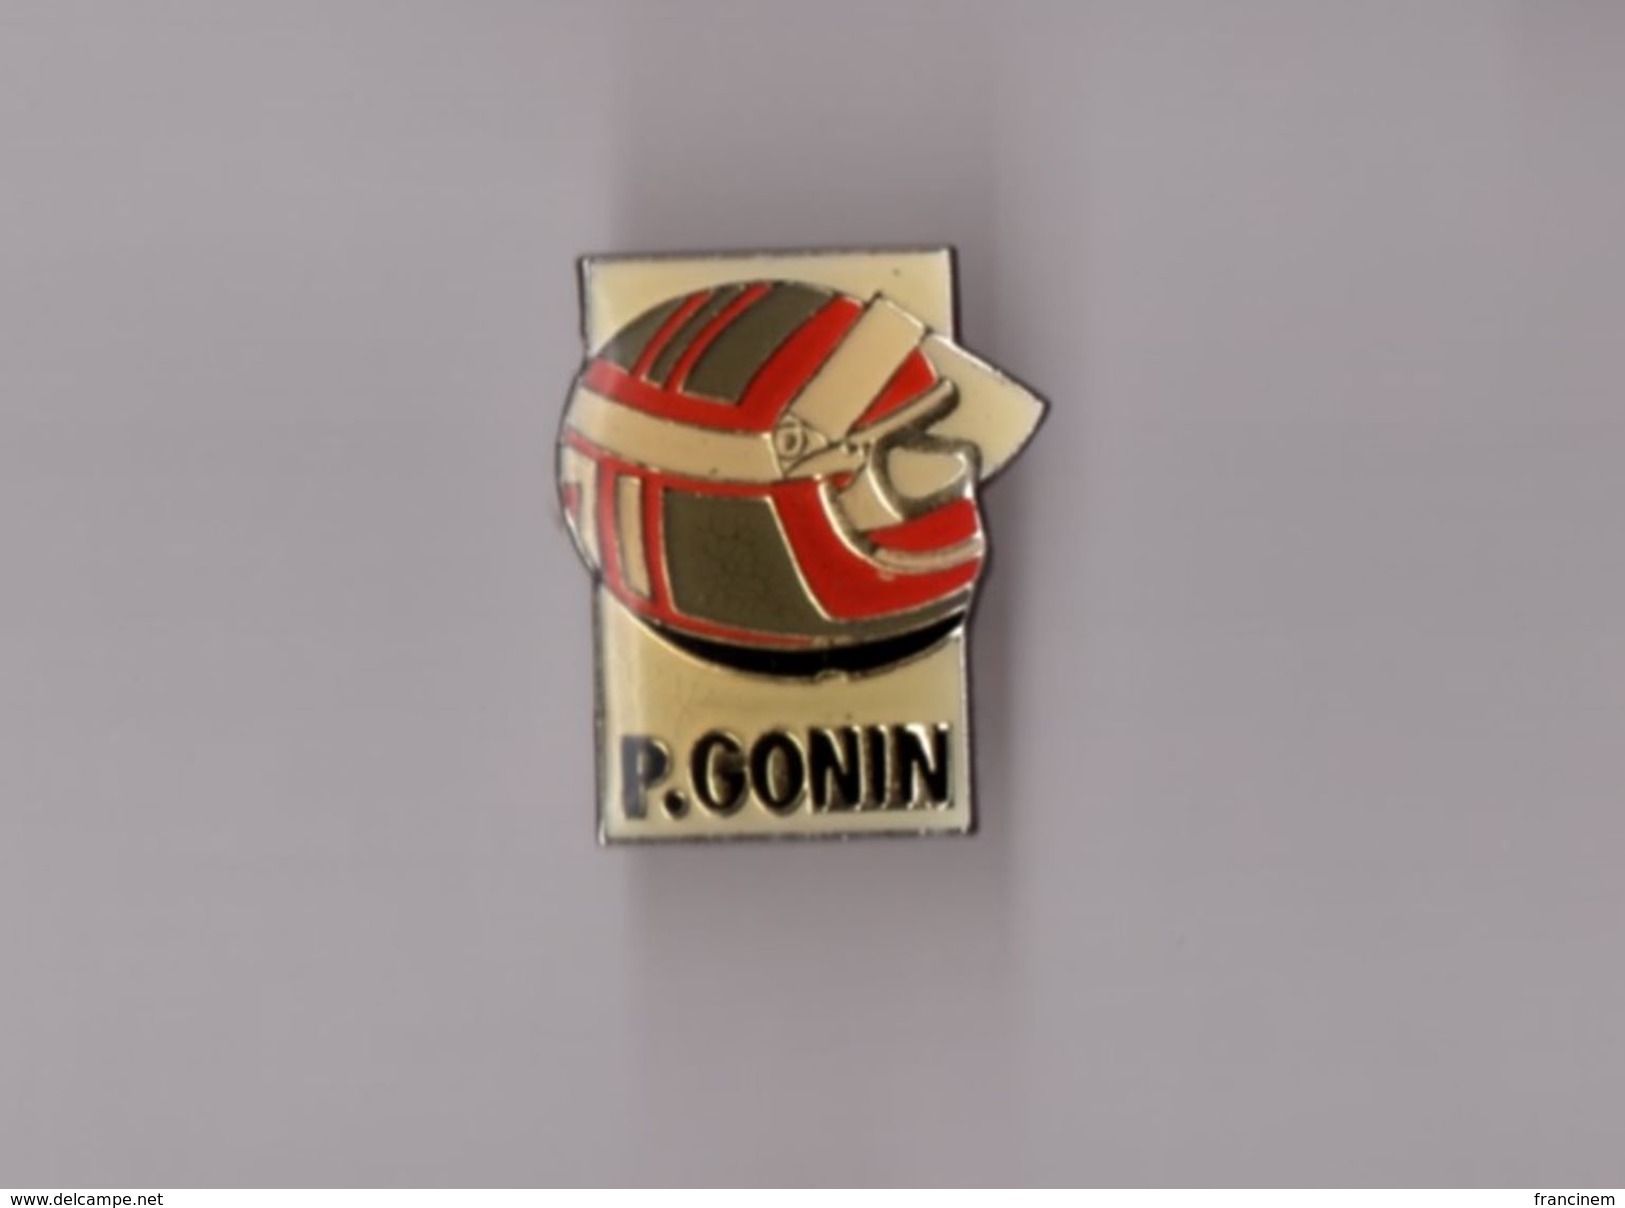 Pin's Formule 1 - Patrick Gonin - Automovilismo - F1